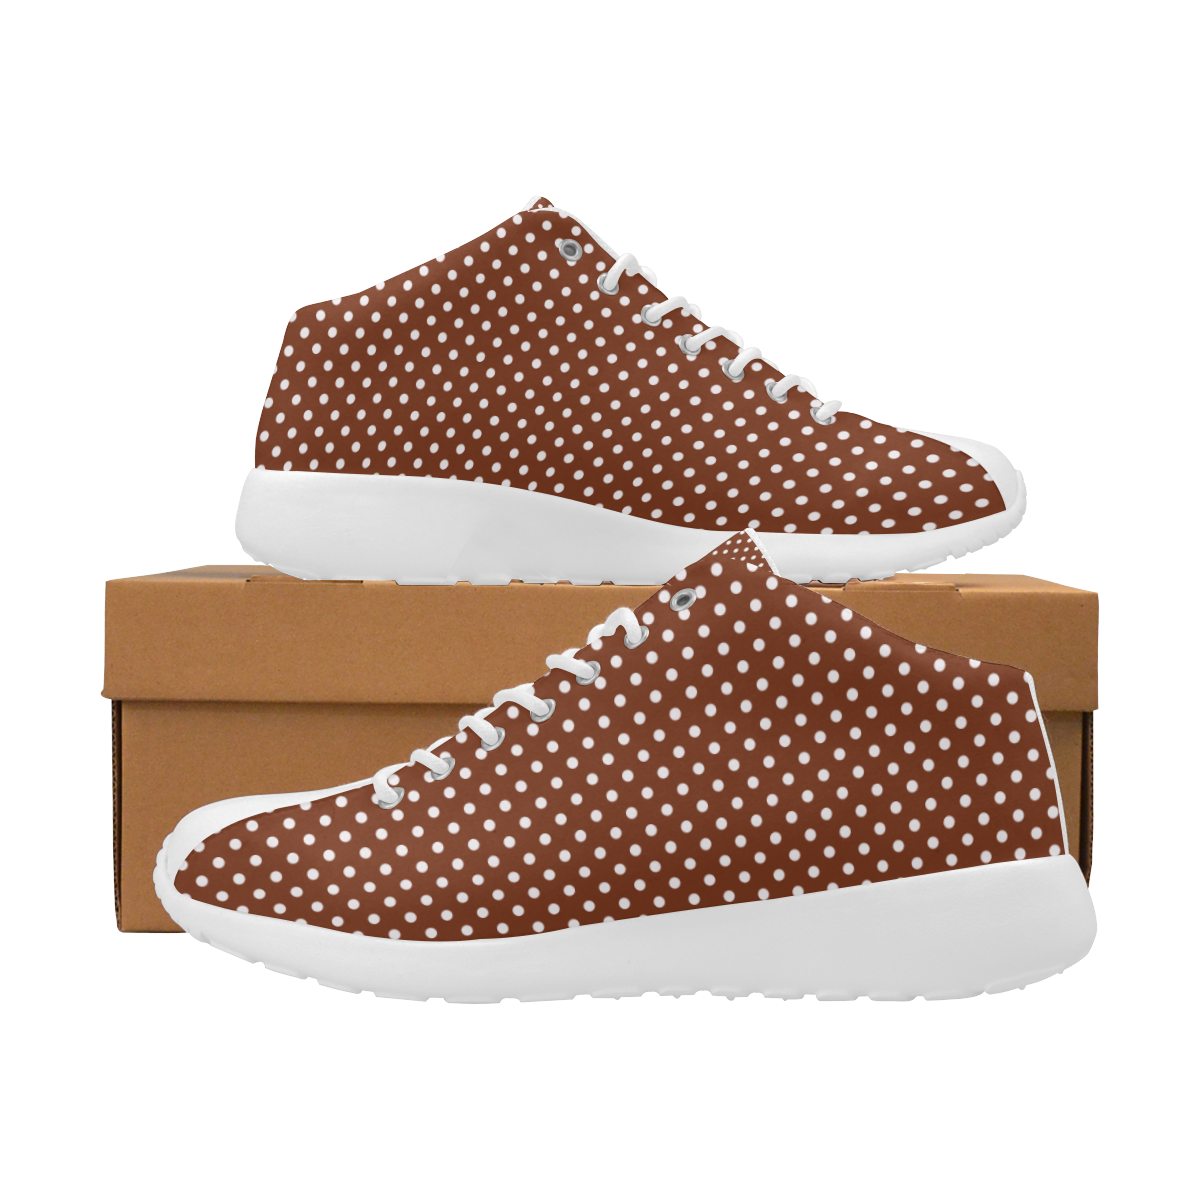 Brown polka dots Women's Basketball Training Shoes (Model 47502)